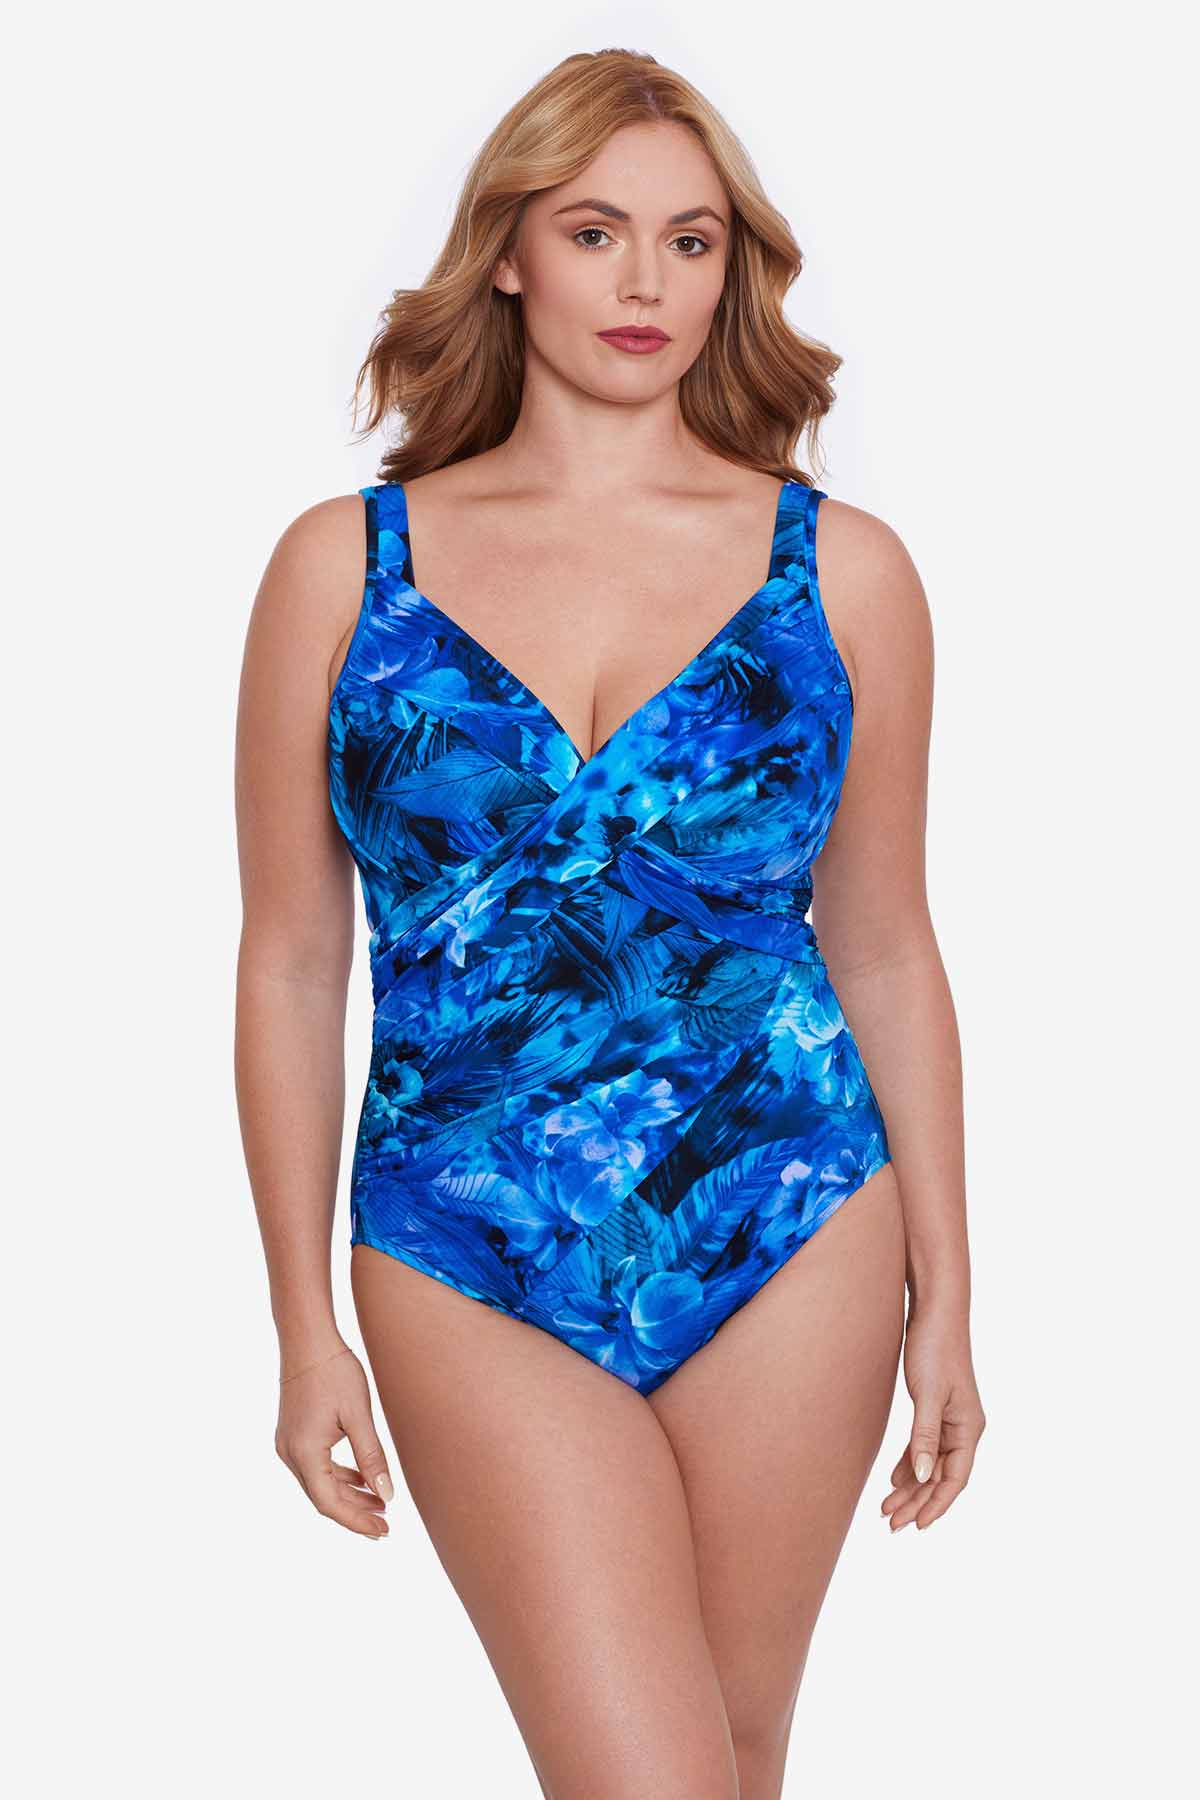 Aqua Eve Plus Size Swim Shorts Women Tummy Control Swimsuit